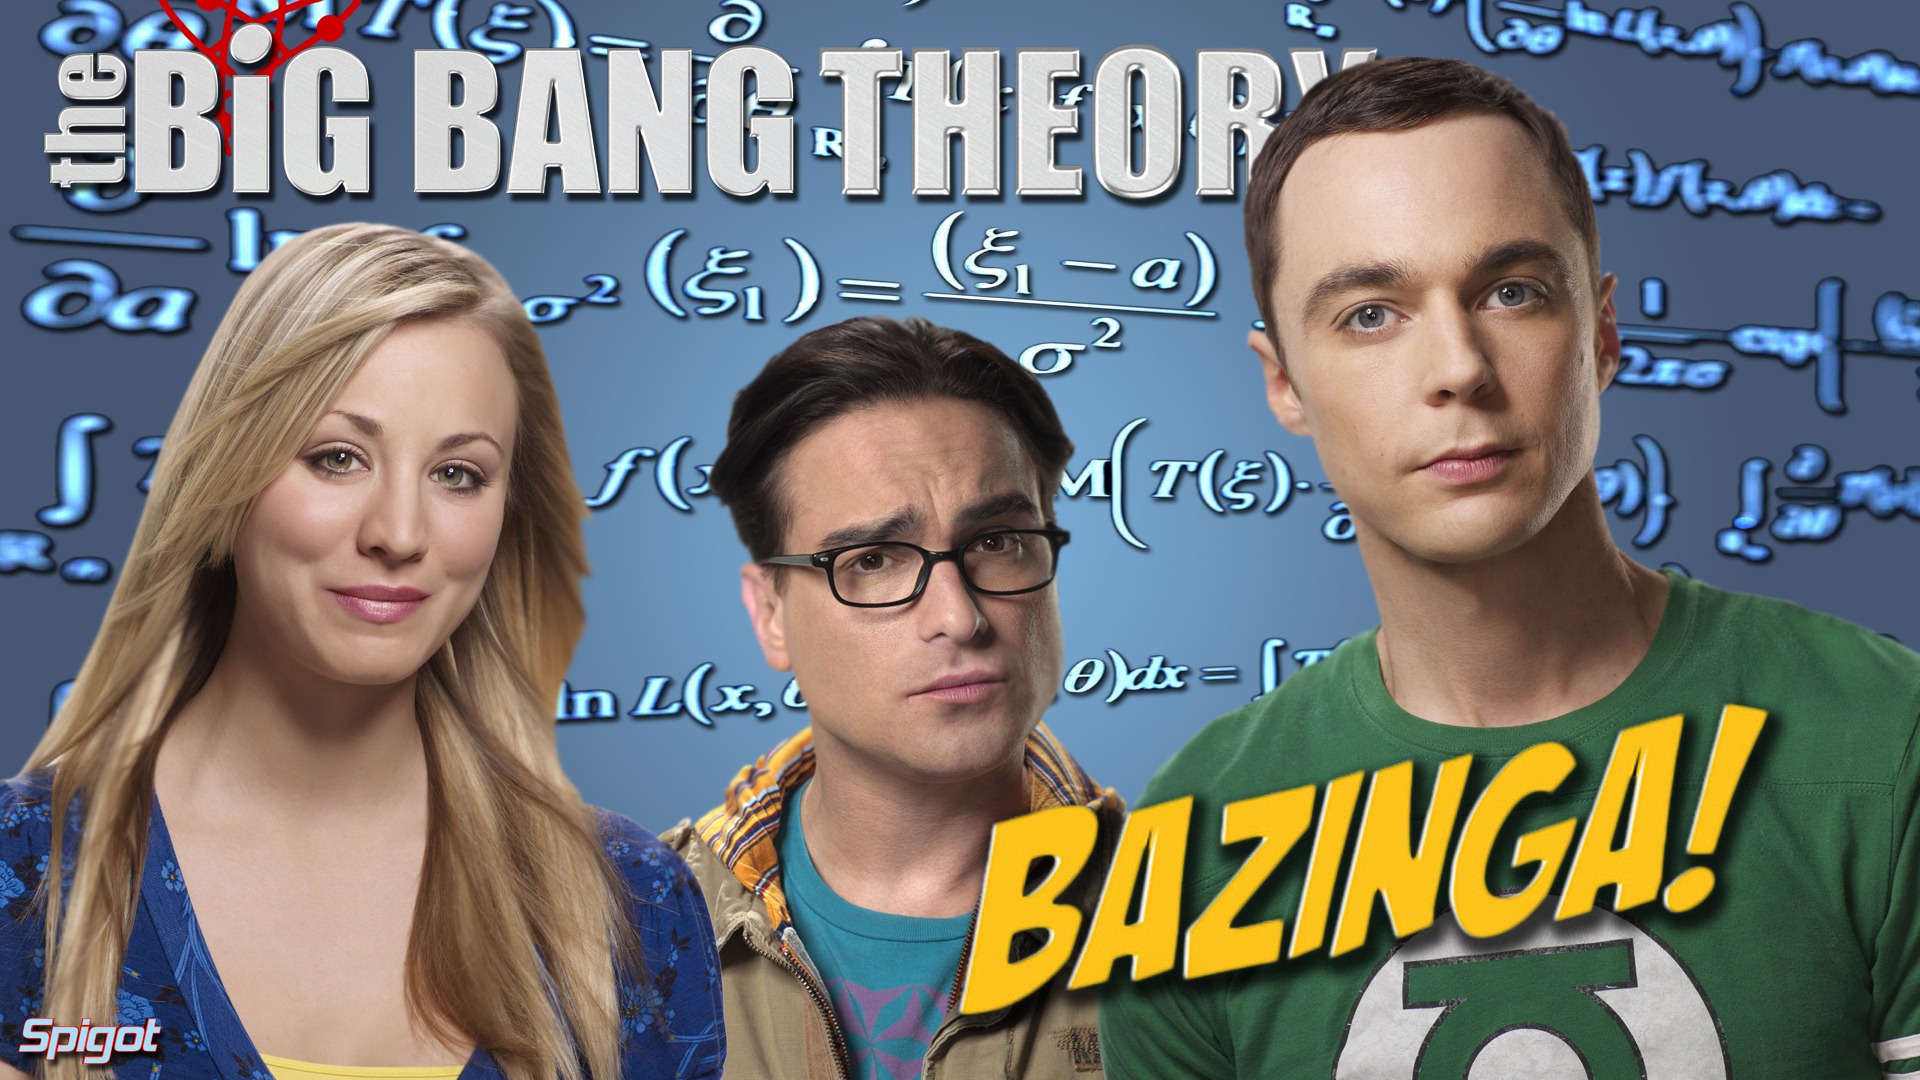 The Big Bang Theory ビッグバン理論TVシリーズHDの壁紙 #7 - 1920x1080